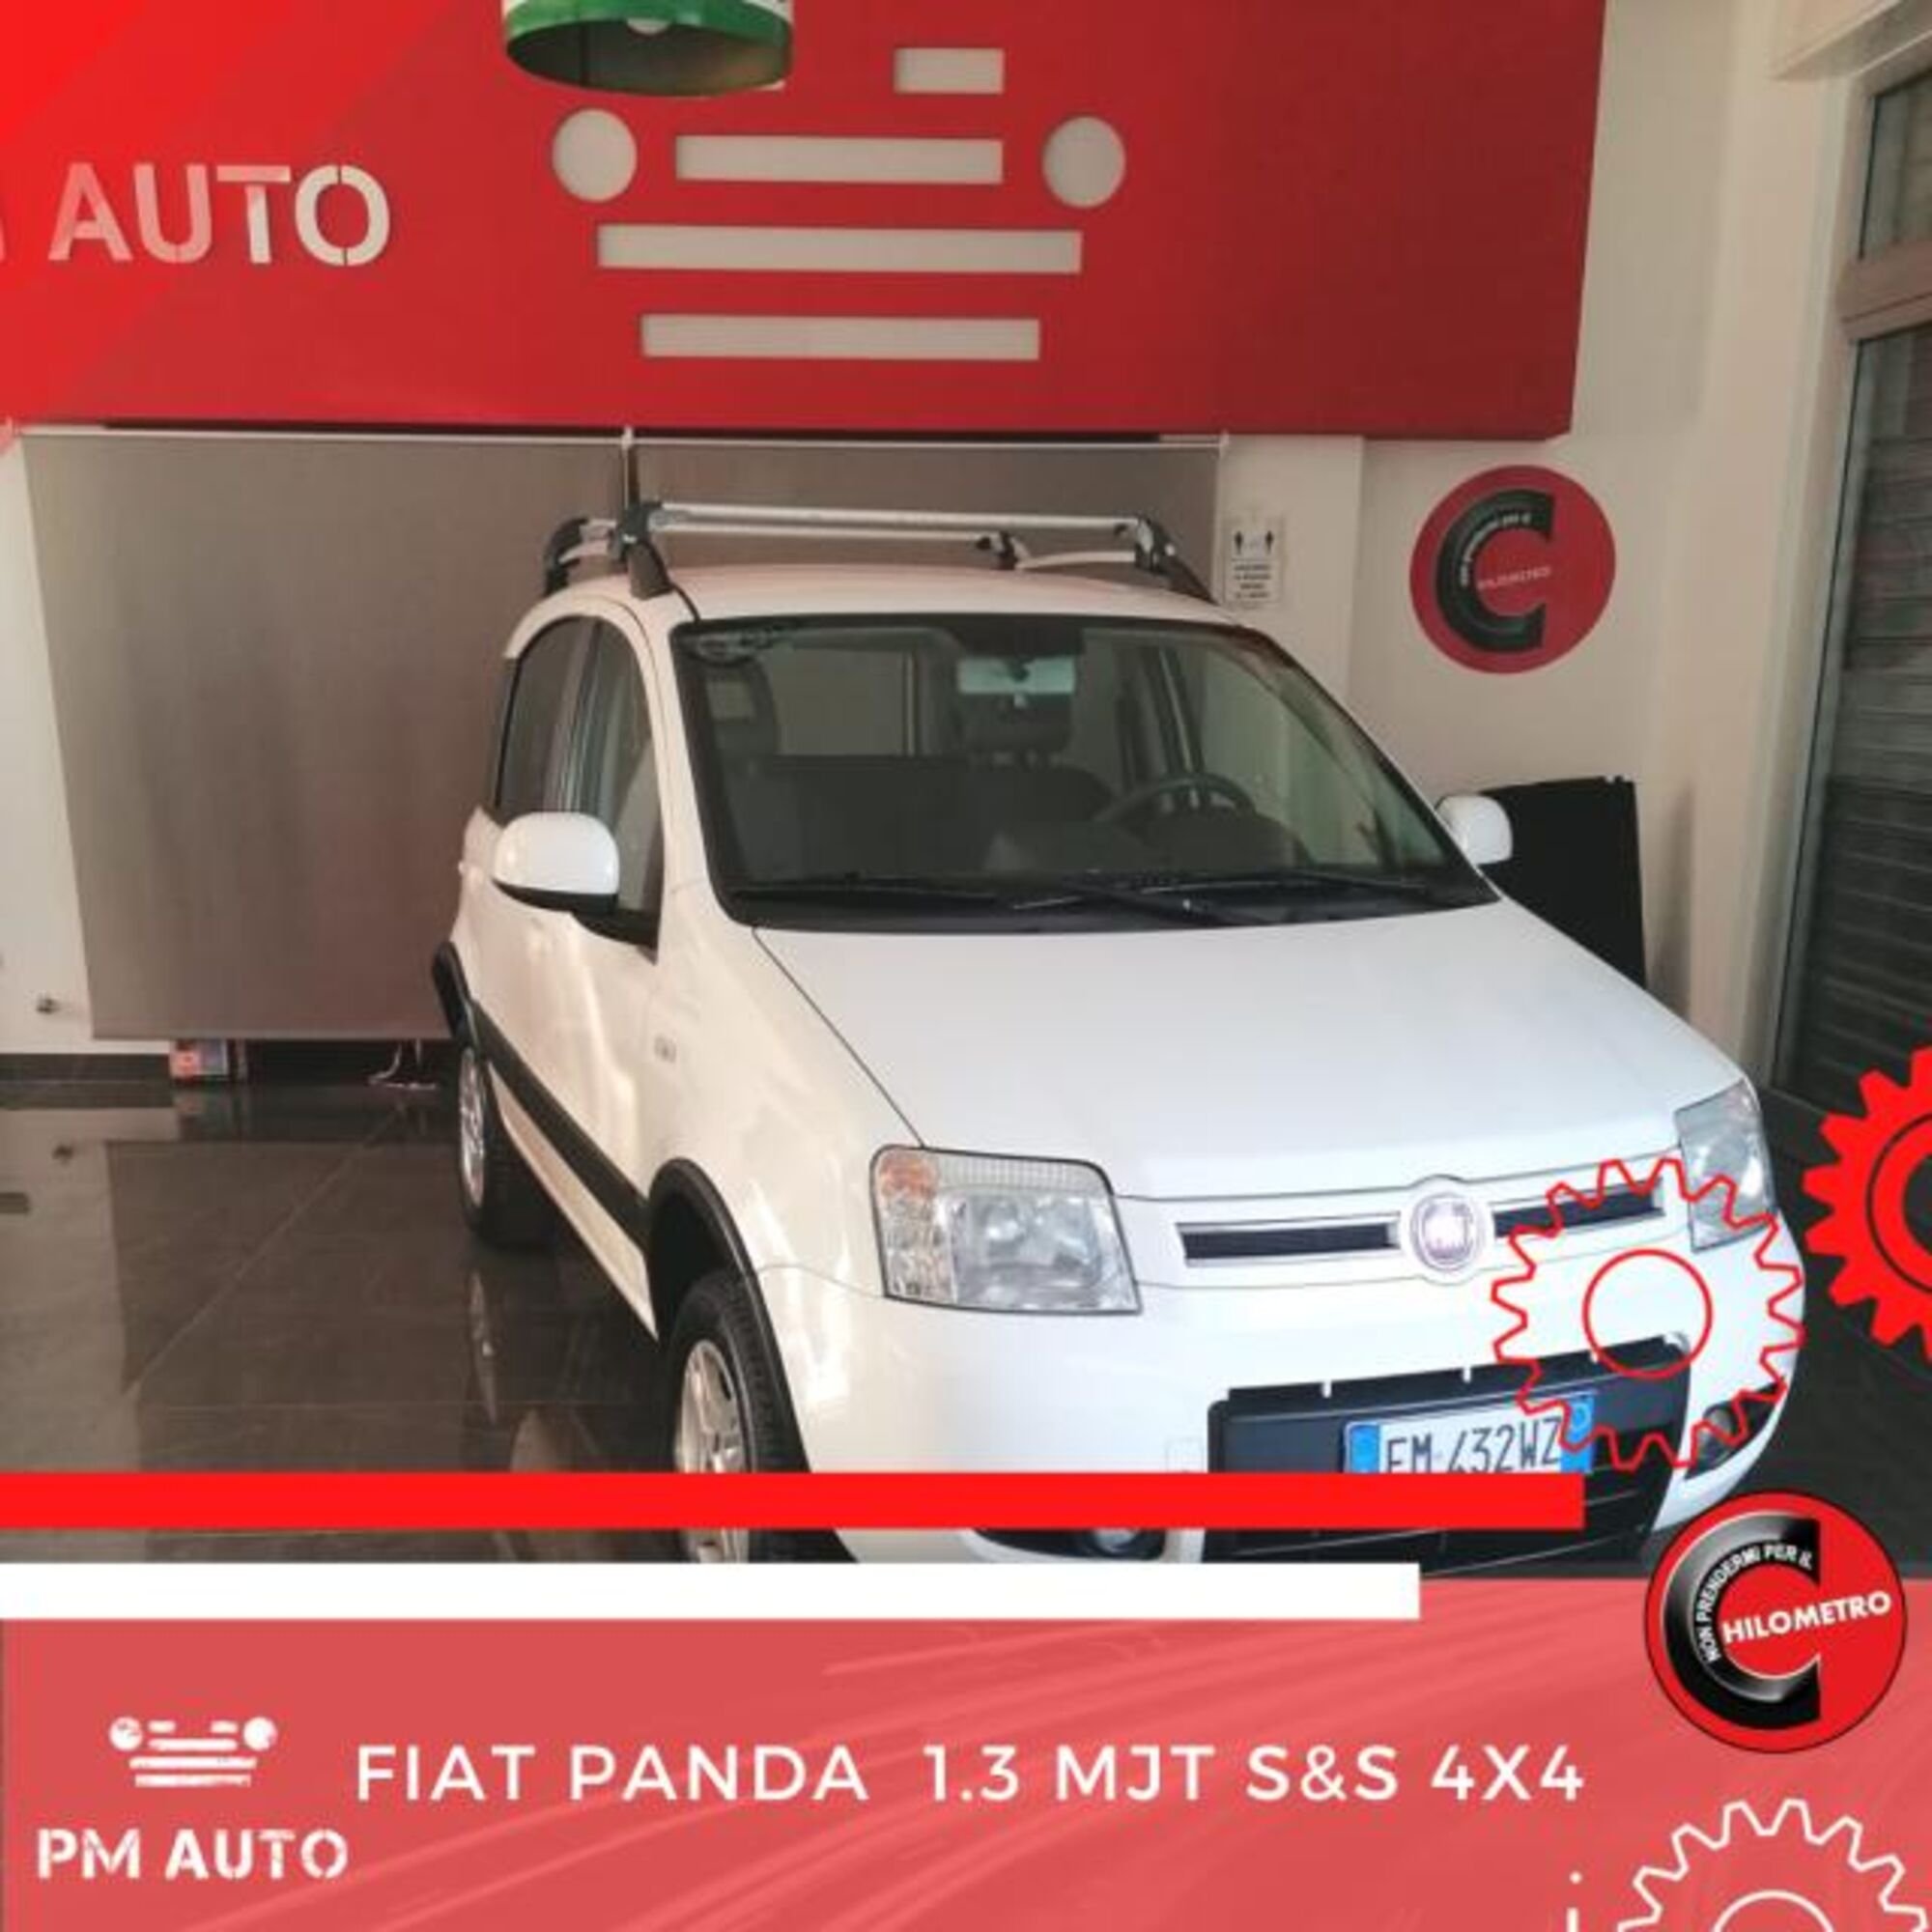 Fiat Panda 1.3 MJT S&S 4x4 usato